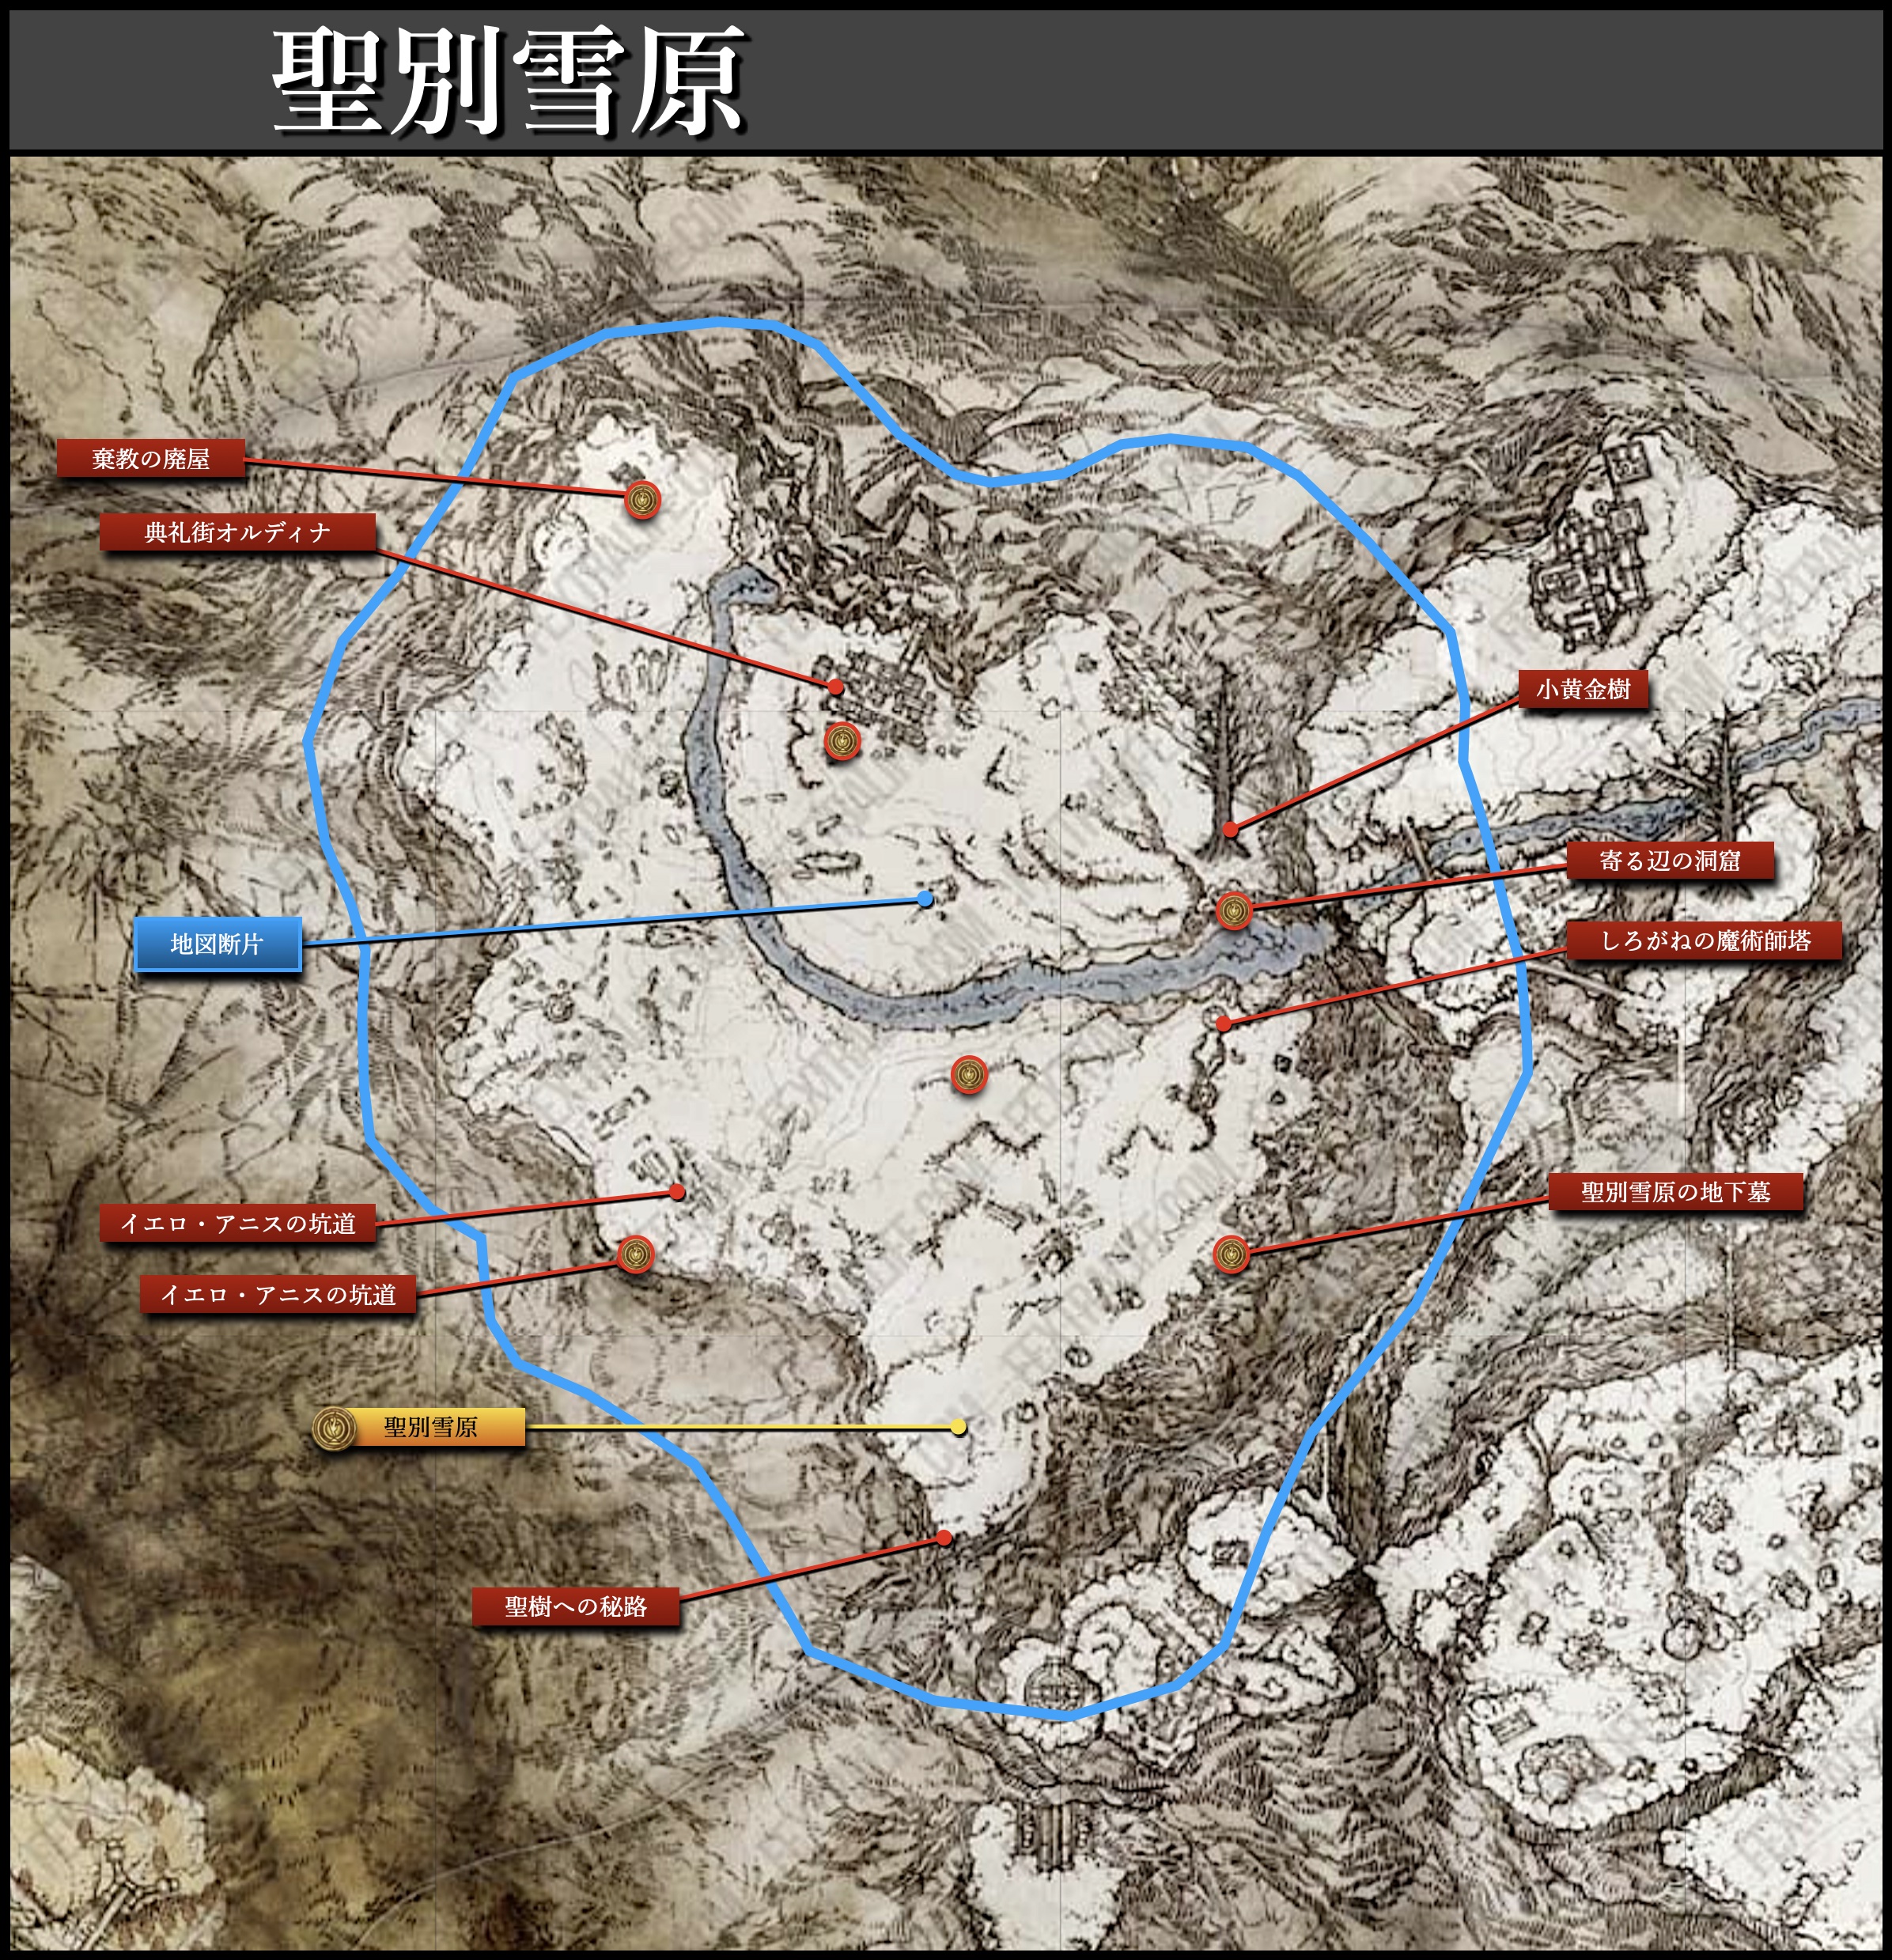 eldenring-giants-sacred-map-2300px